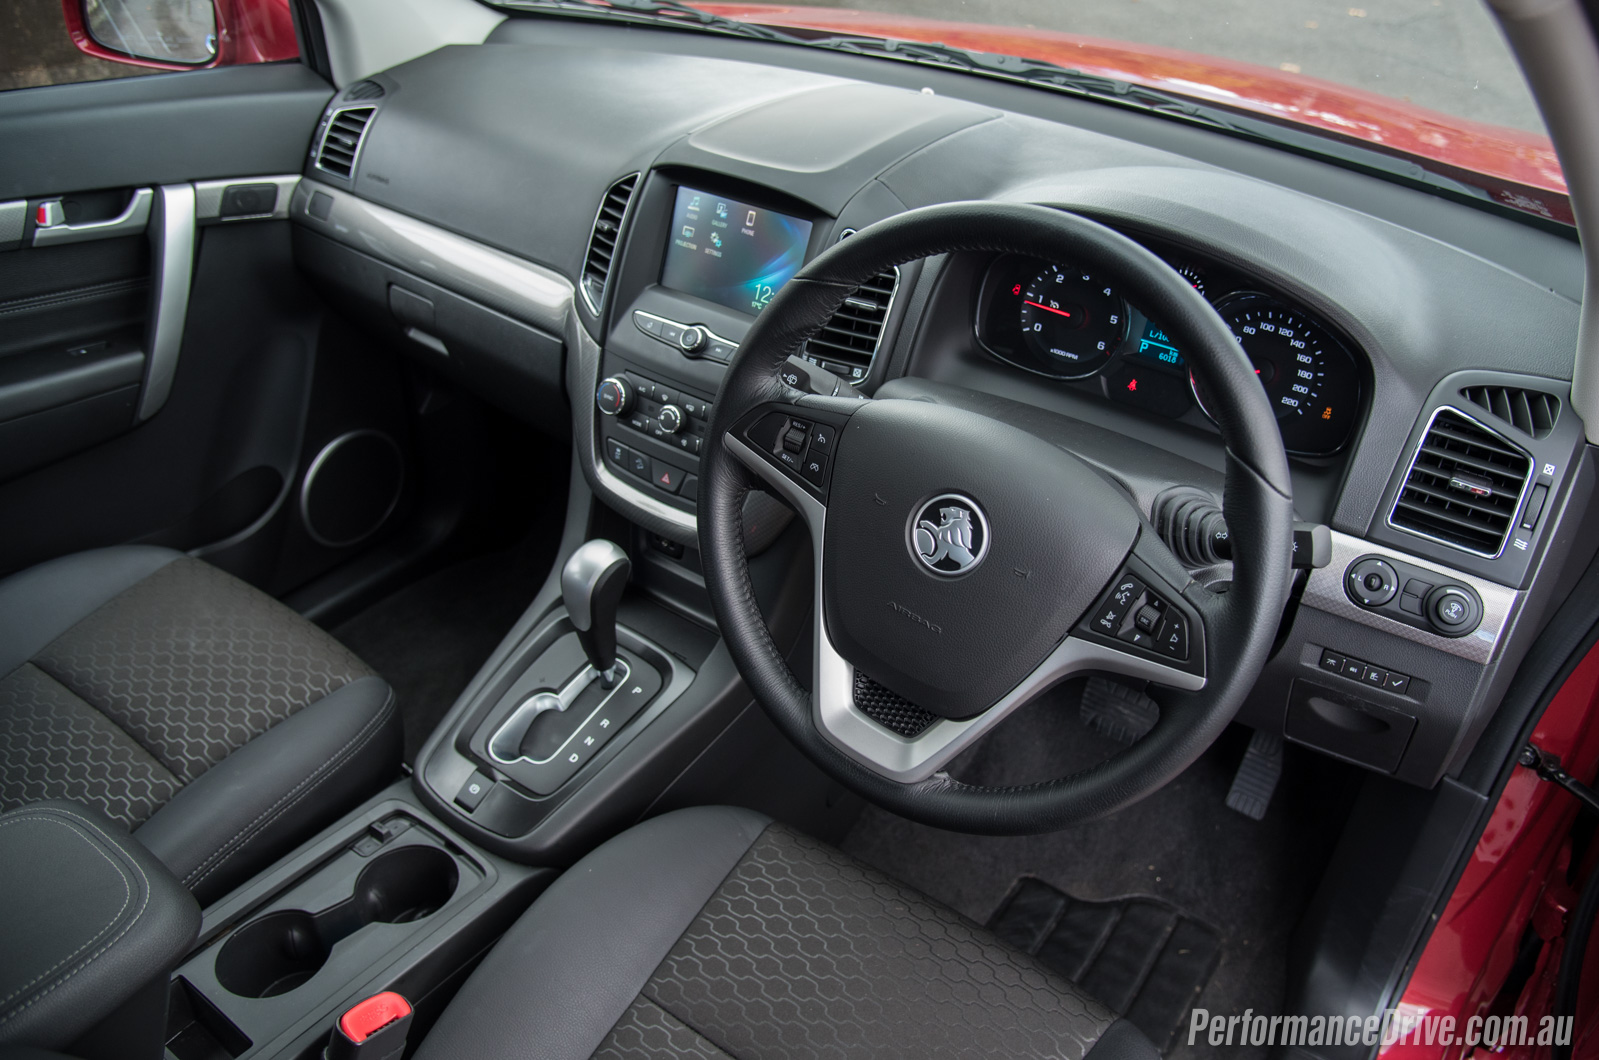 2016 Holden Captiva Diesel Review Video Performancedrive